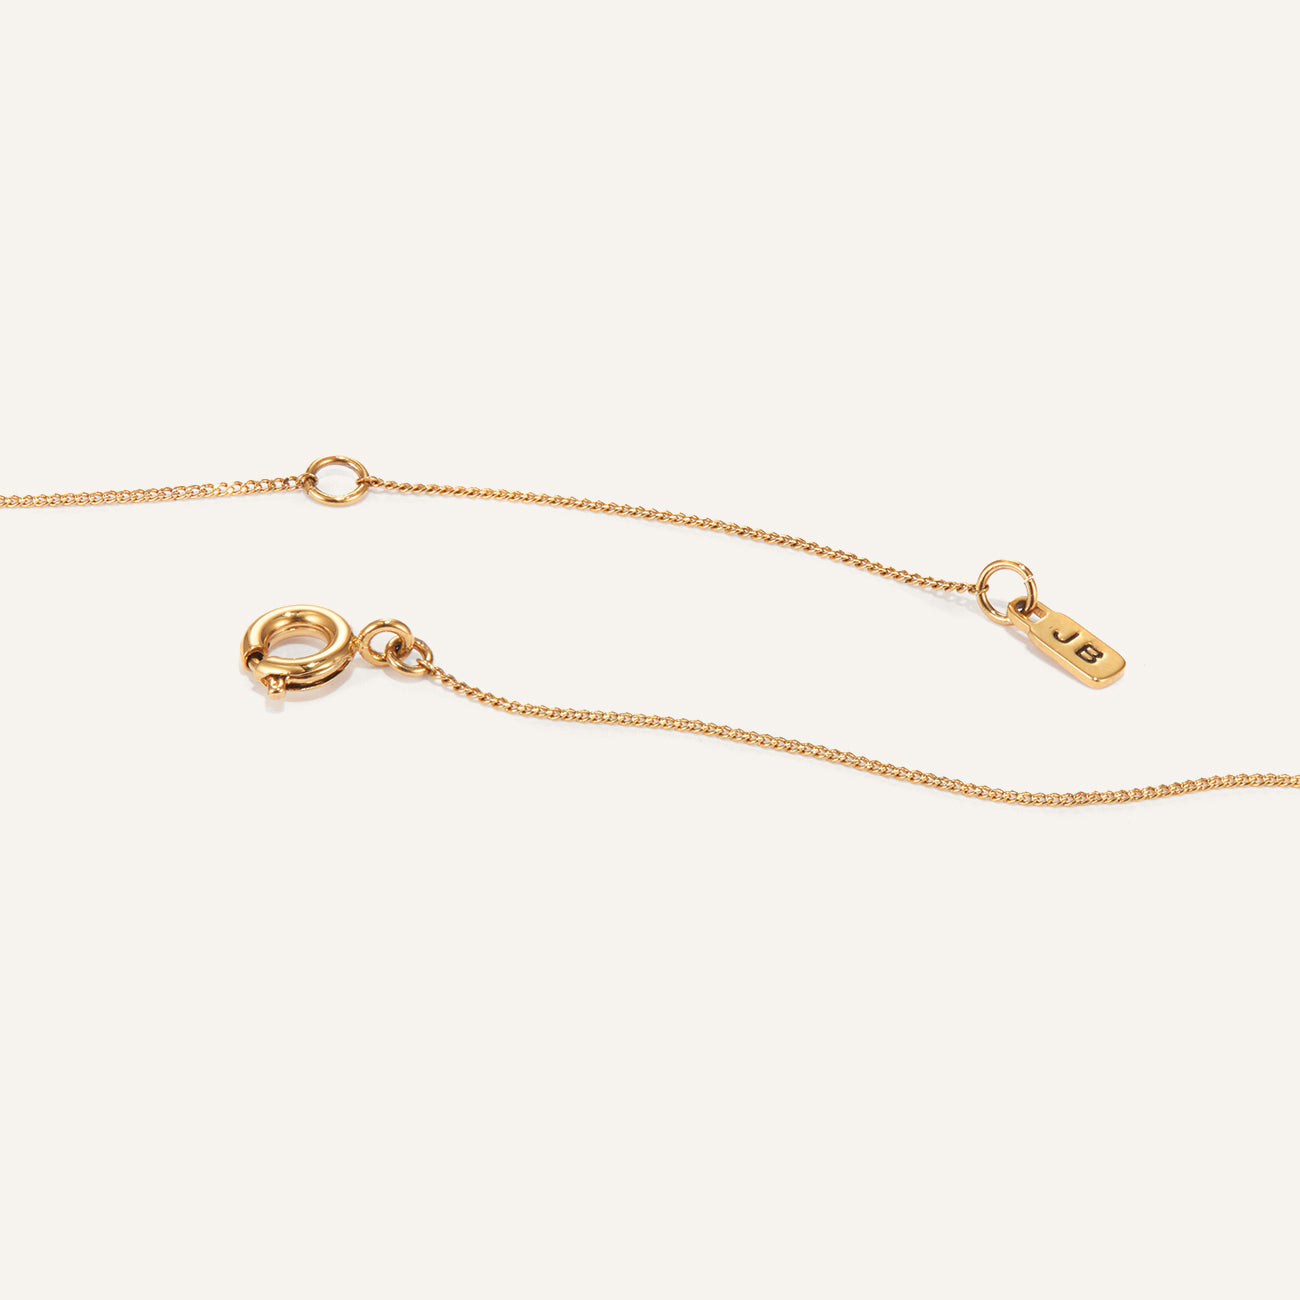 14k Gold Plated Monogram Necklace - N